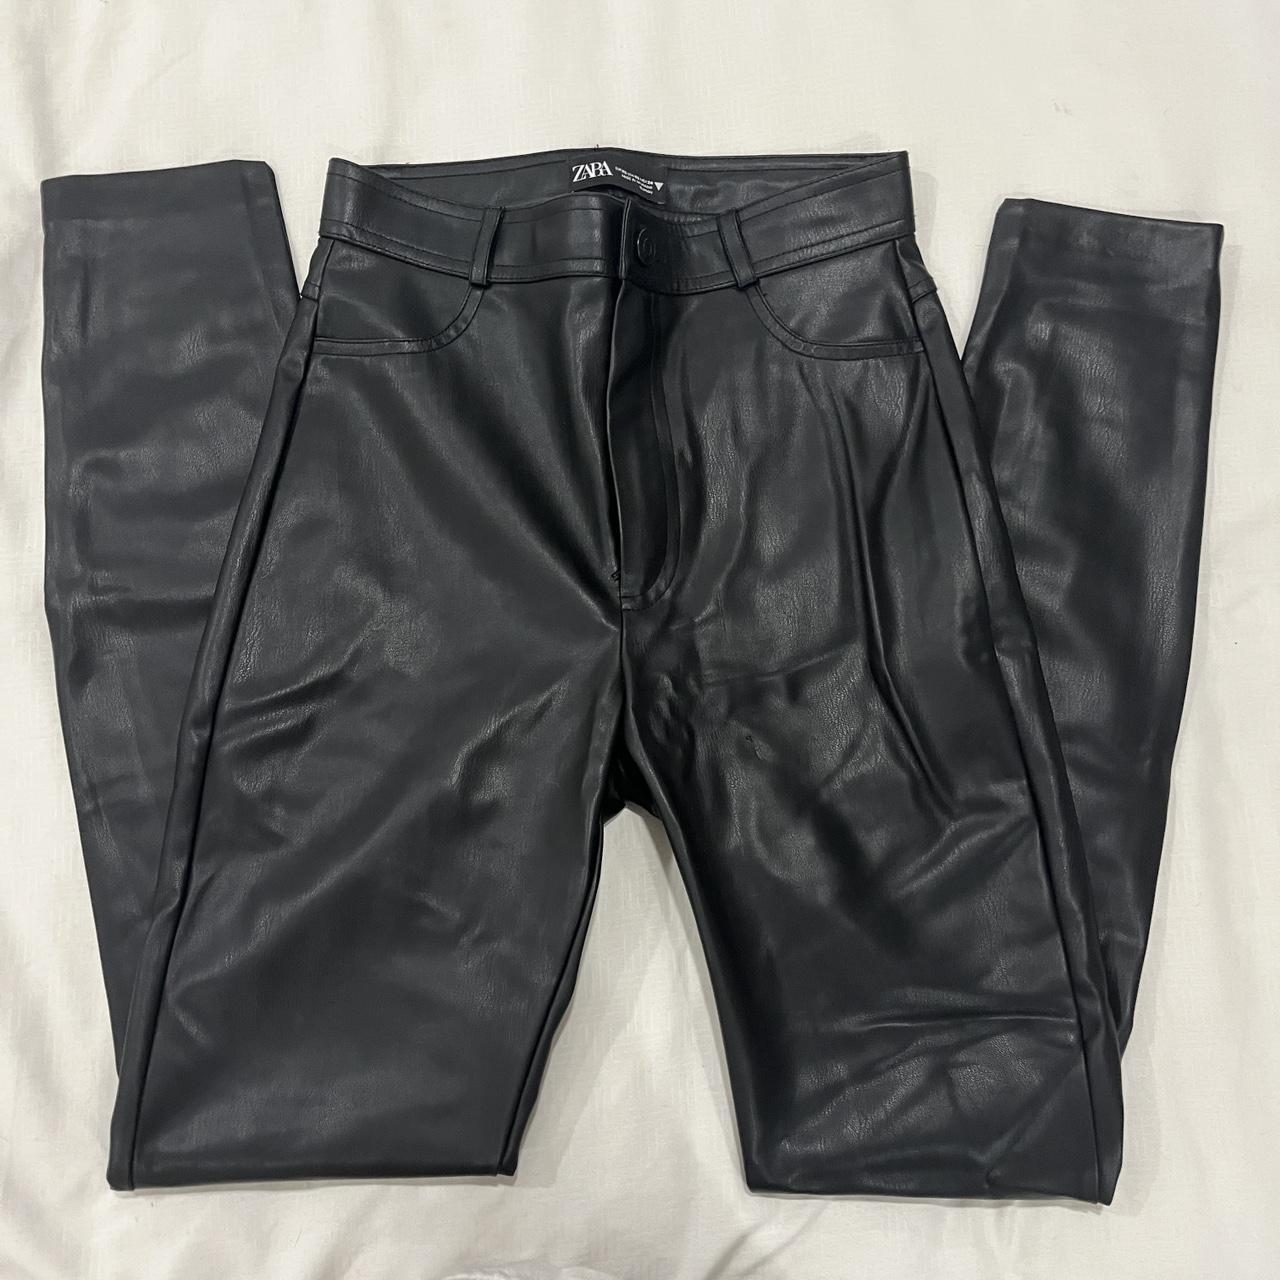 Slim Fit Imitation leather trousers - Black - Men | H&M